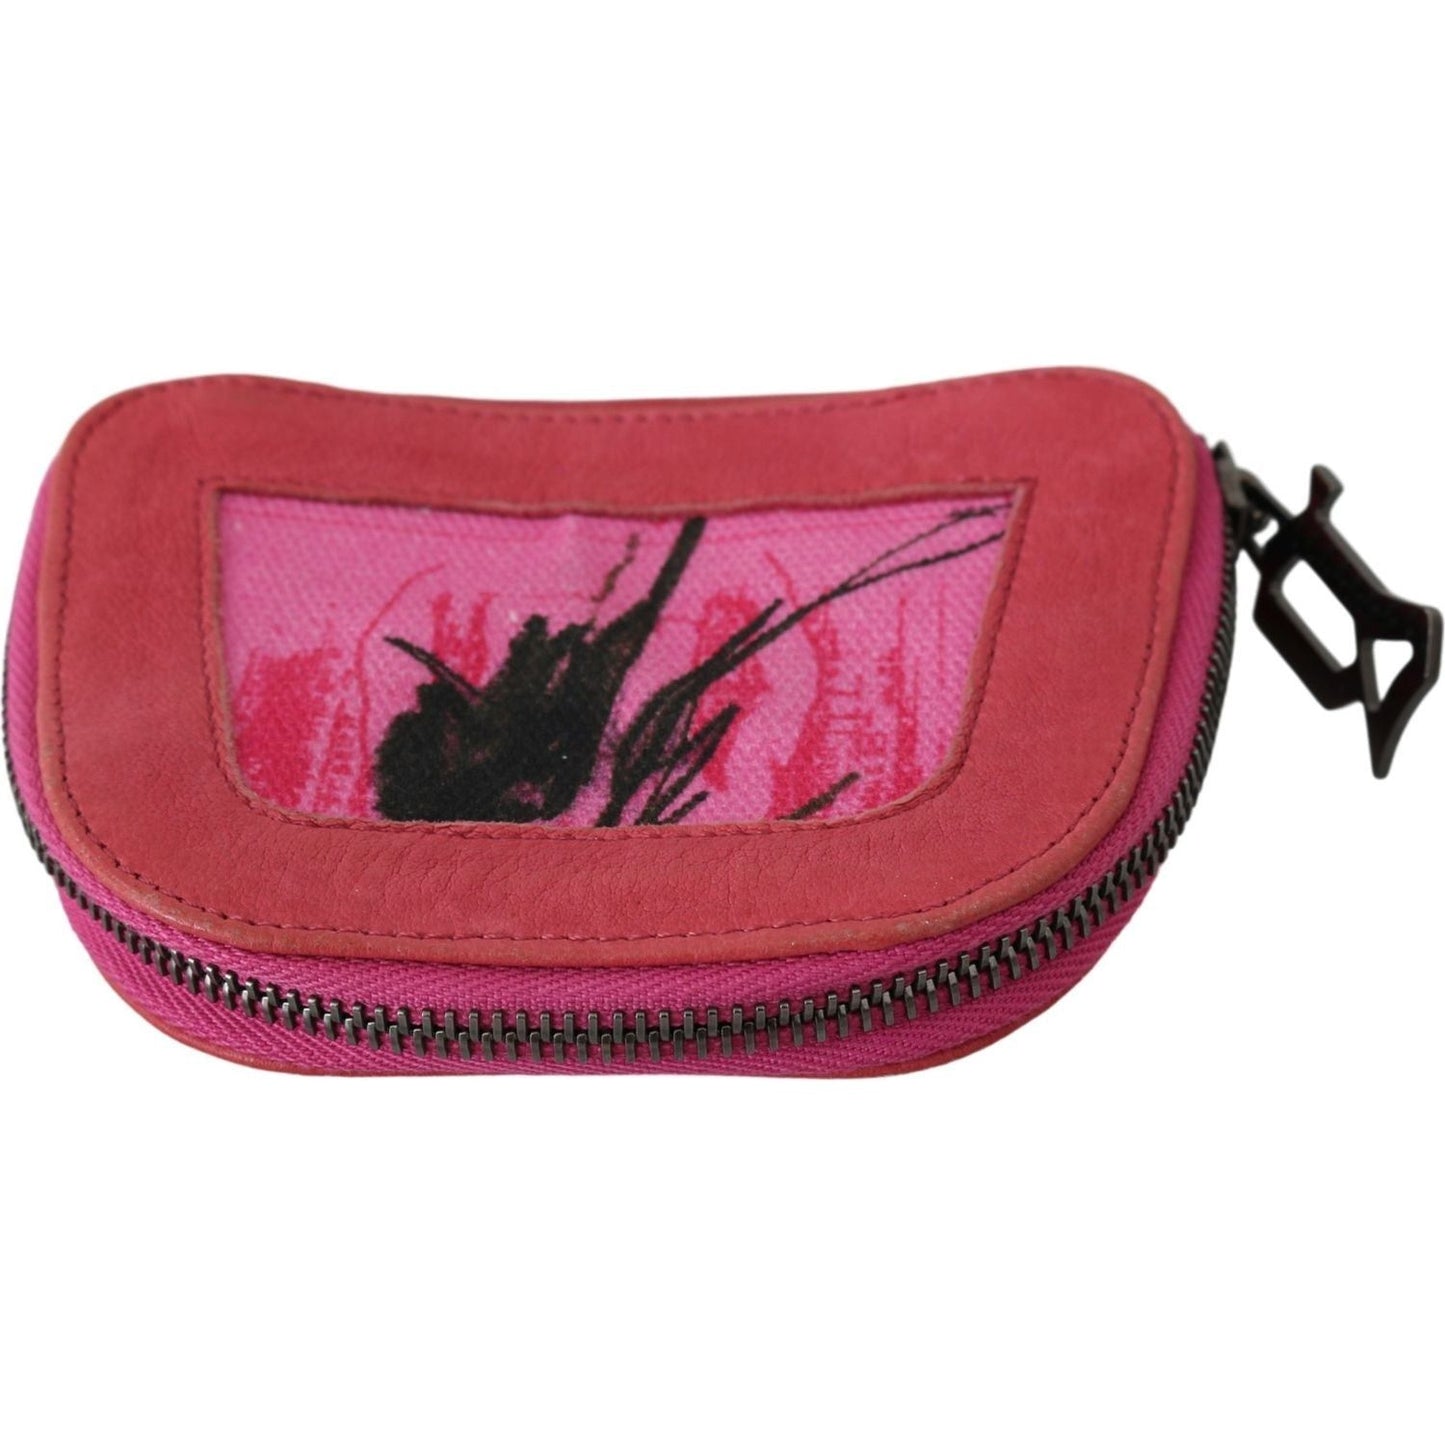 PINKO Elegant Pink Fabric Coin Wallet pink-suede-printed-coin-holder-women-fabric-zippered-purse Purse IMG_0184-a9de1b88-8ec.jpg